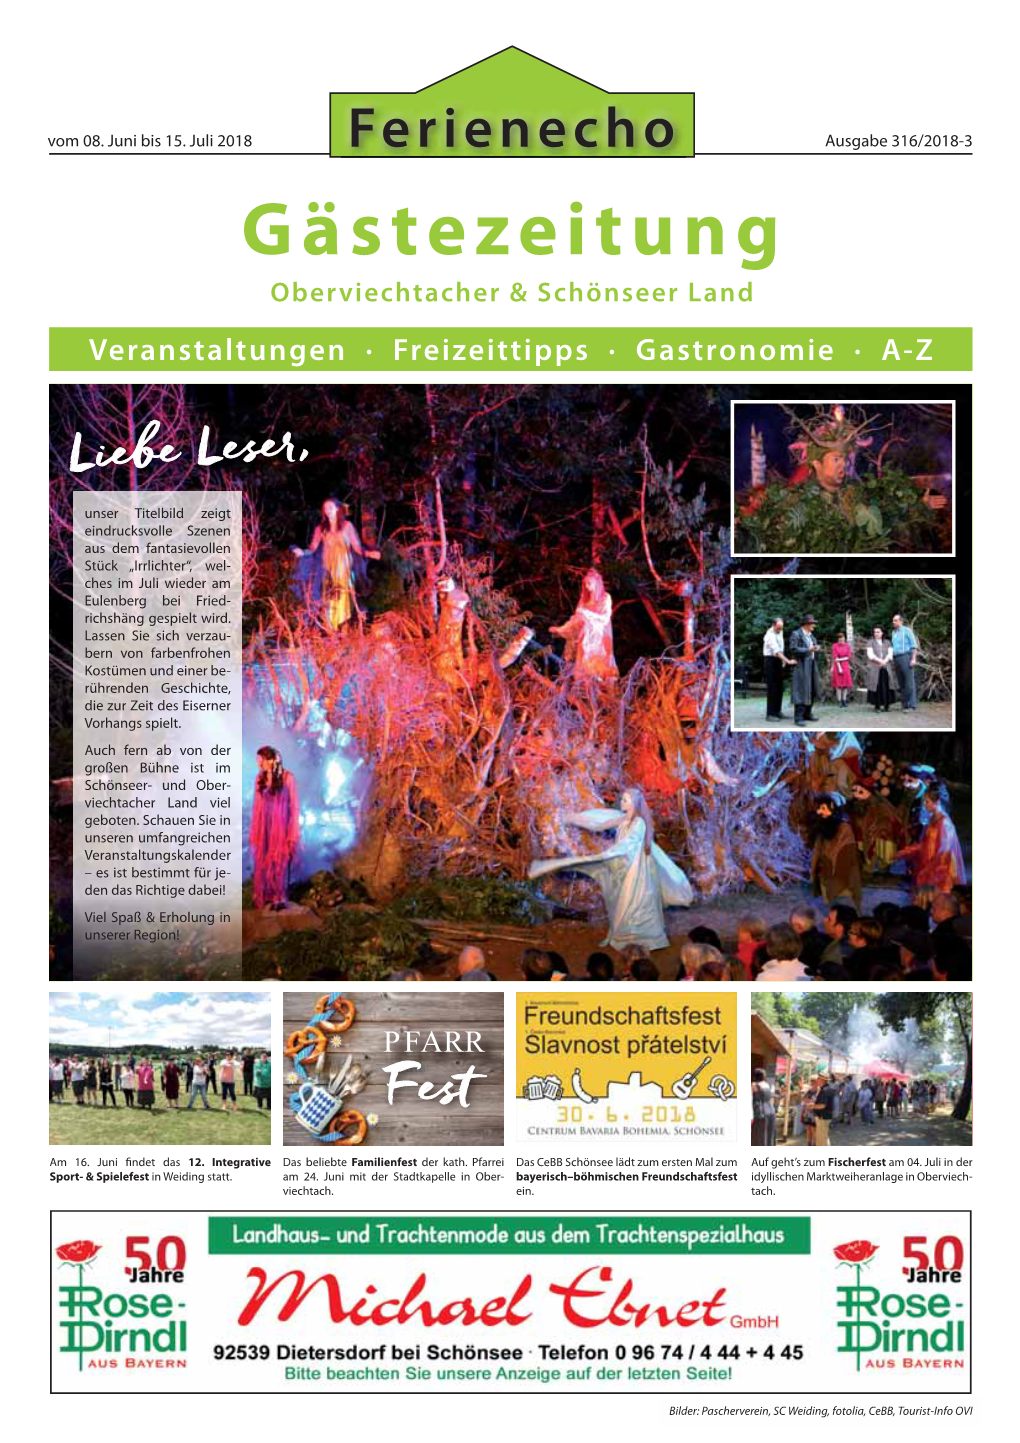 Gästezeitung Oberviechtacher & Schönseer Land Veranstaltungen · Freizeittipps · Gastronomie · A-Z